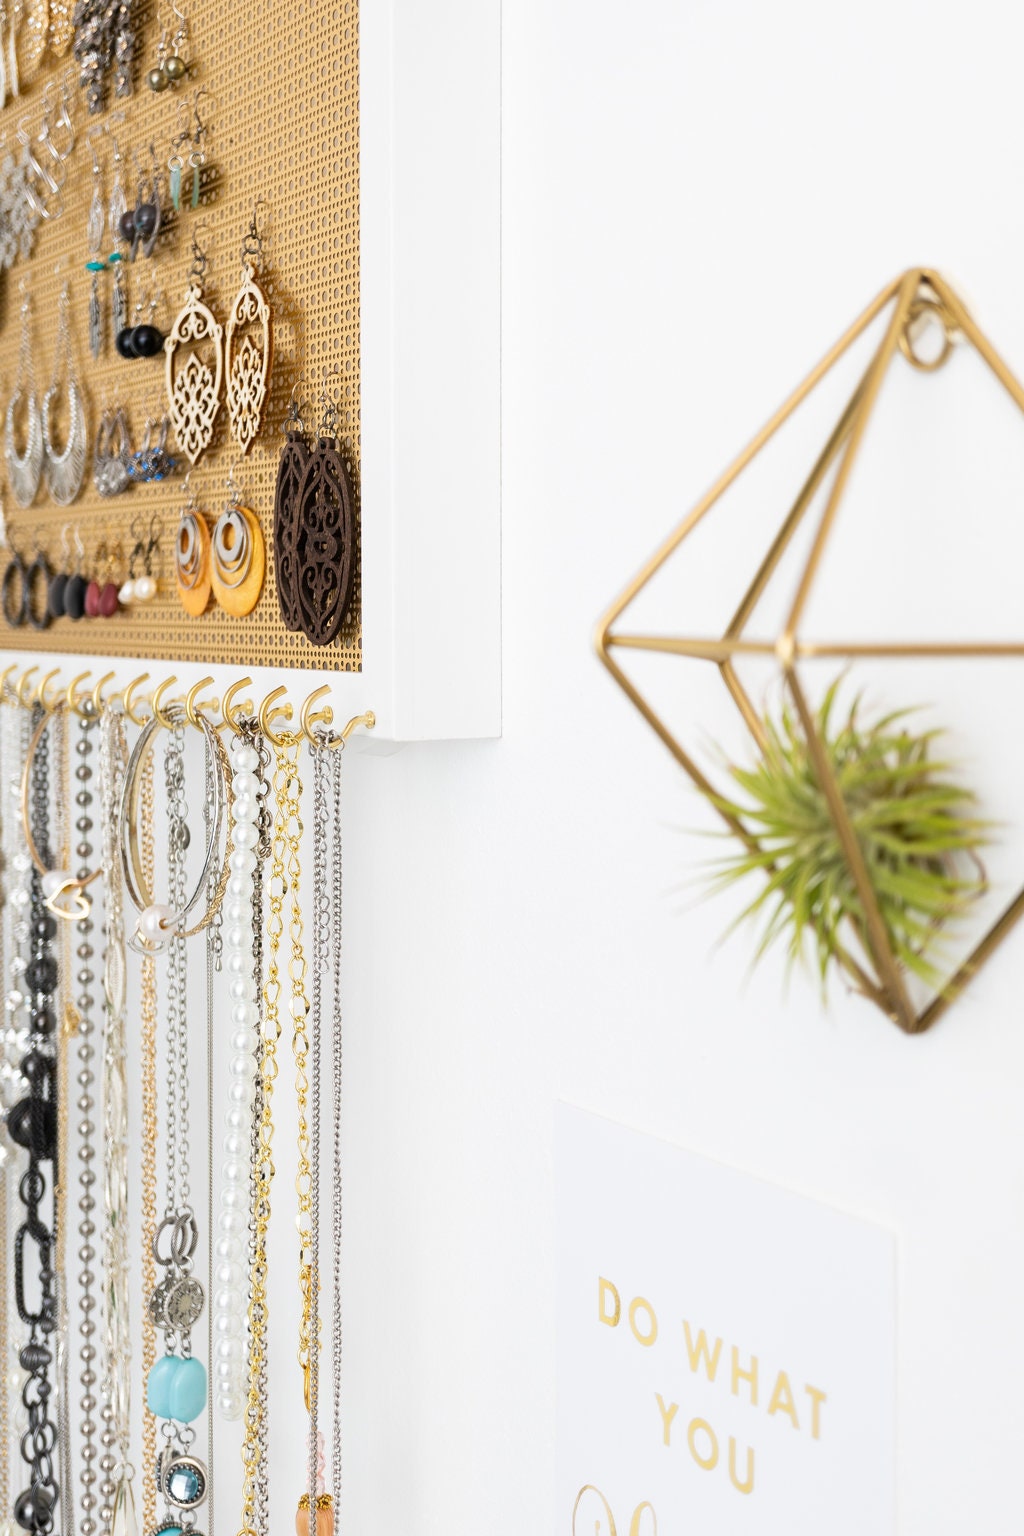 25 Creative DIY Wall Jewelry Organizers To Inspire You